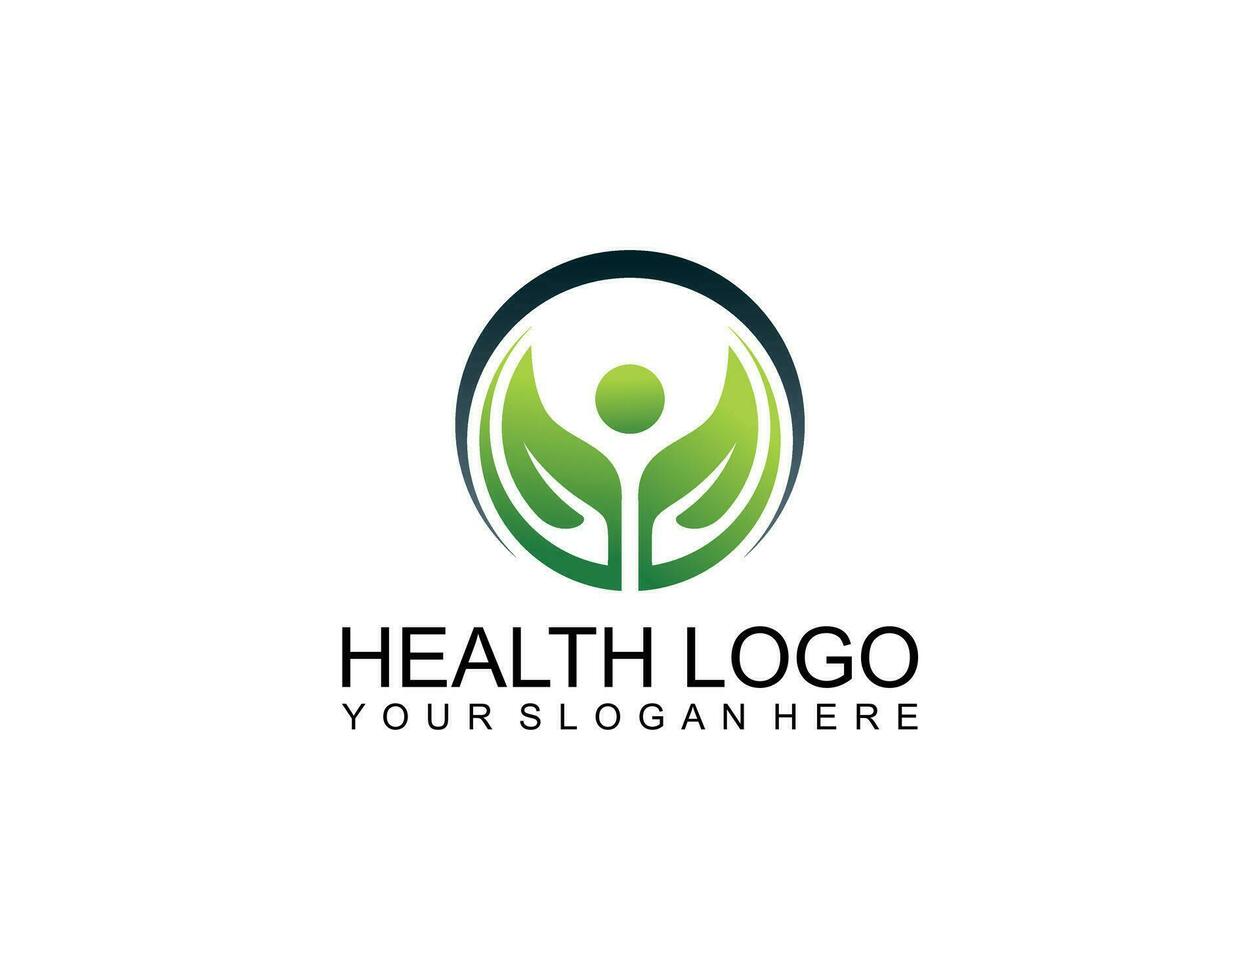 Human think health, spirit and success logo design inspiration vector